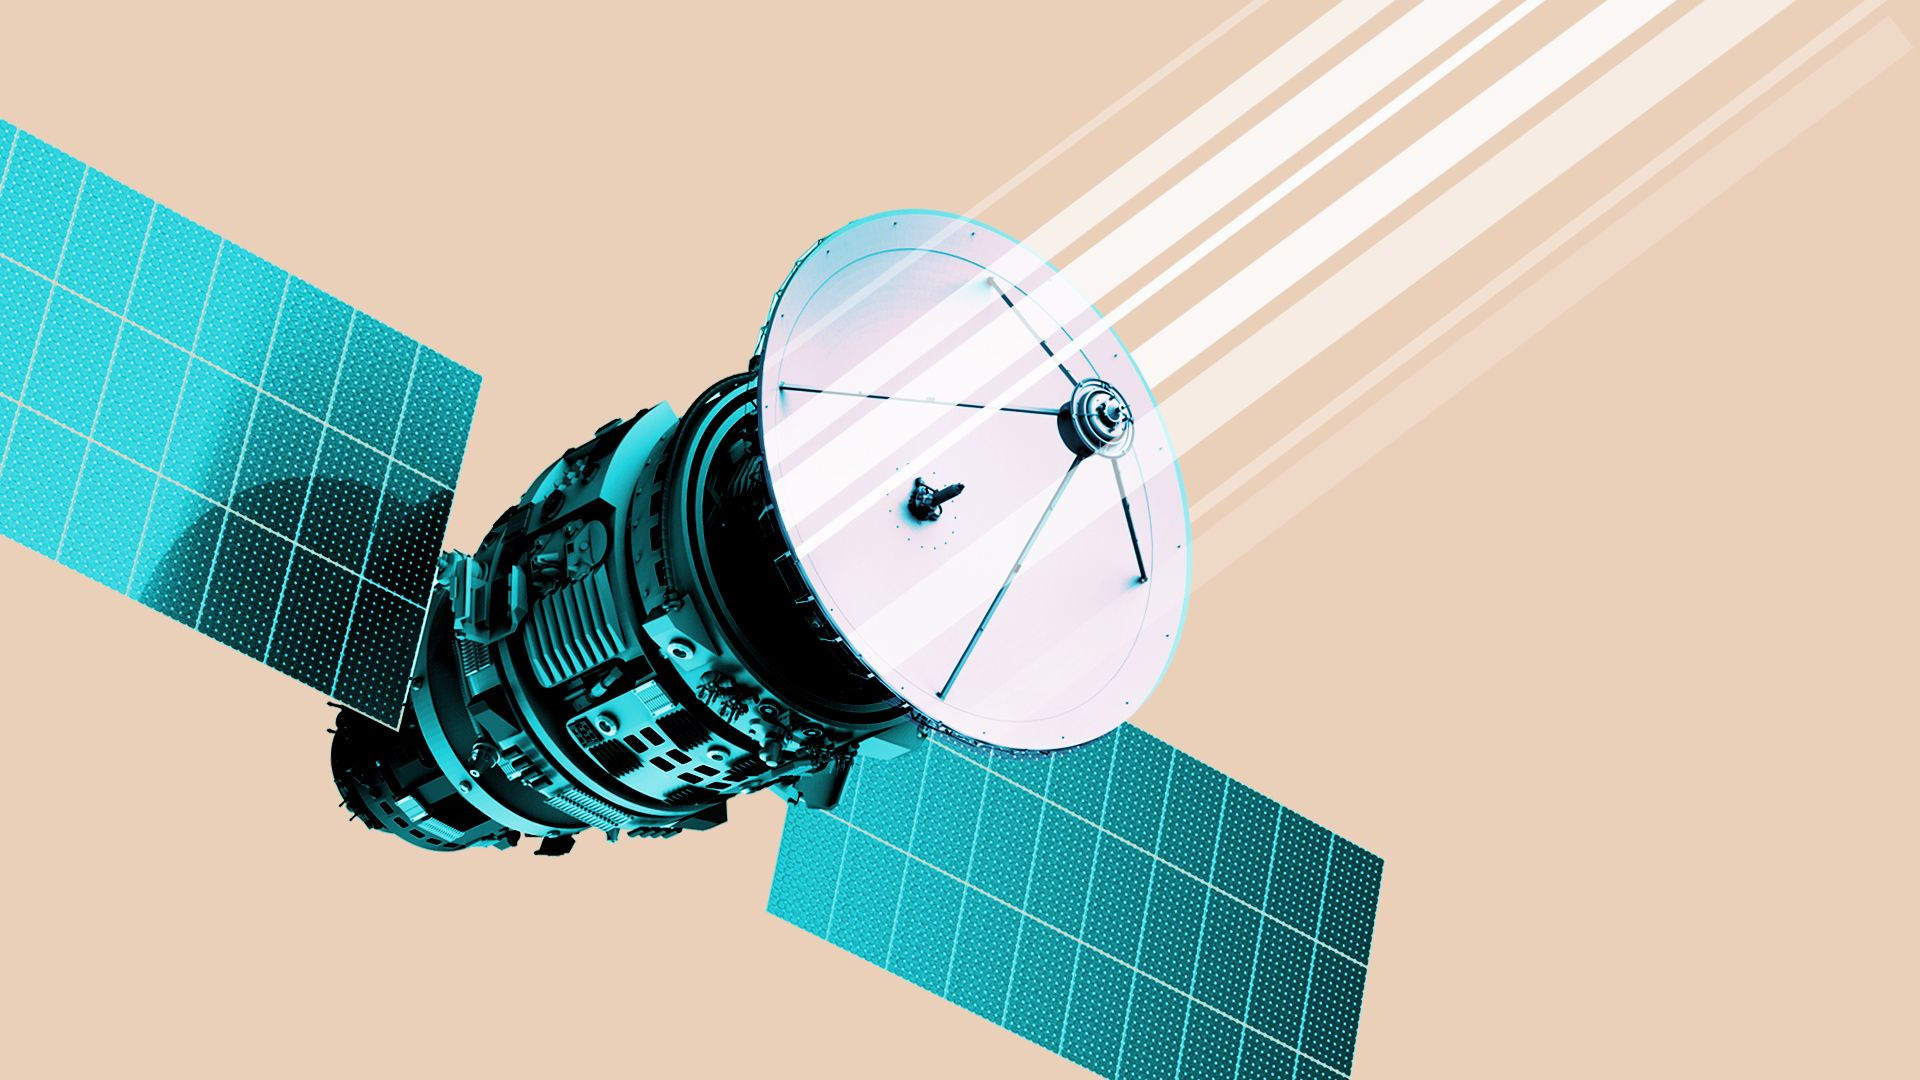  Illustration of satellite